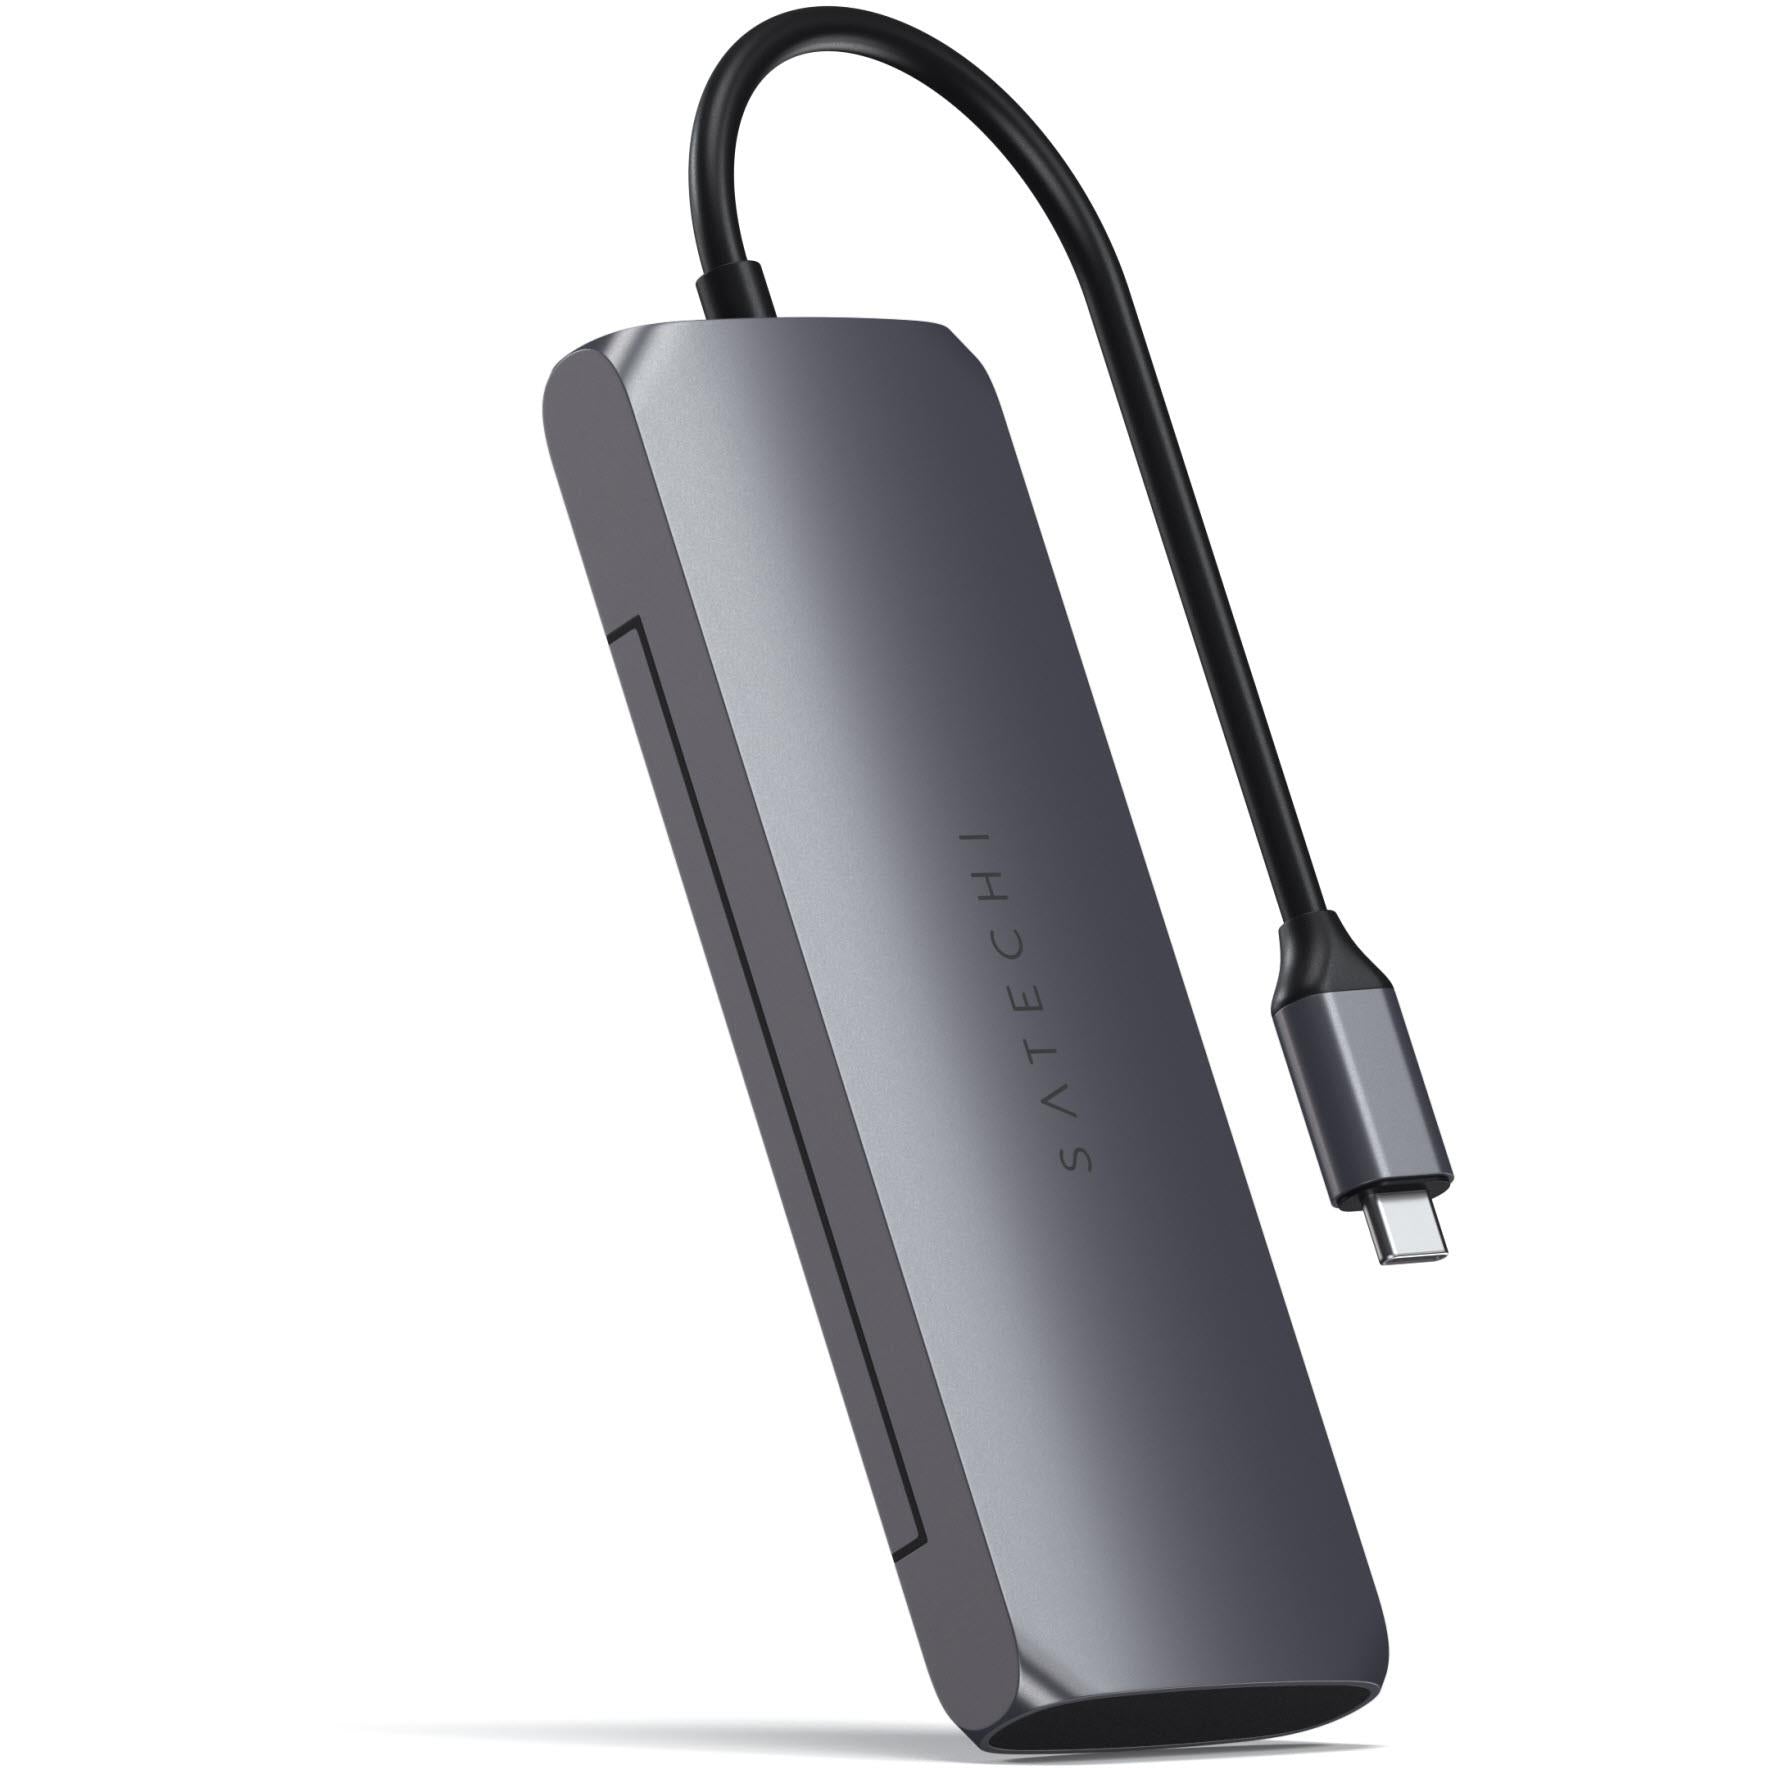 Samsung Disque SSD EXT T7 2To Gris Titane externe USB 3.1 portable